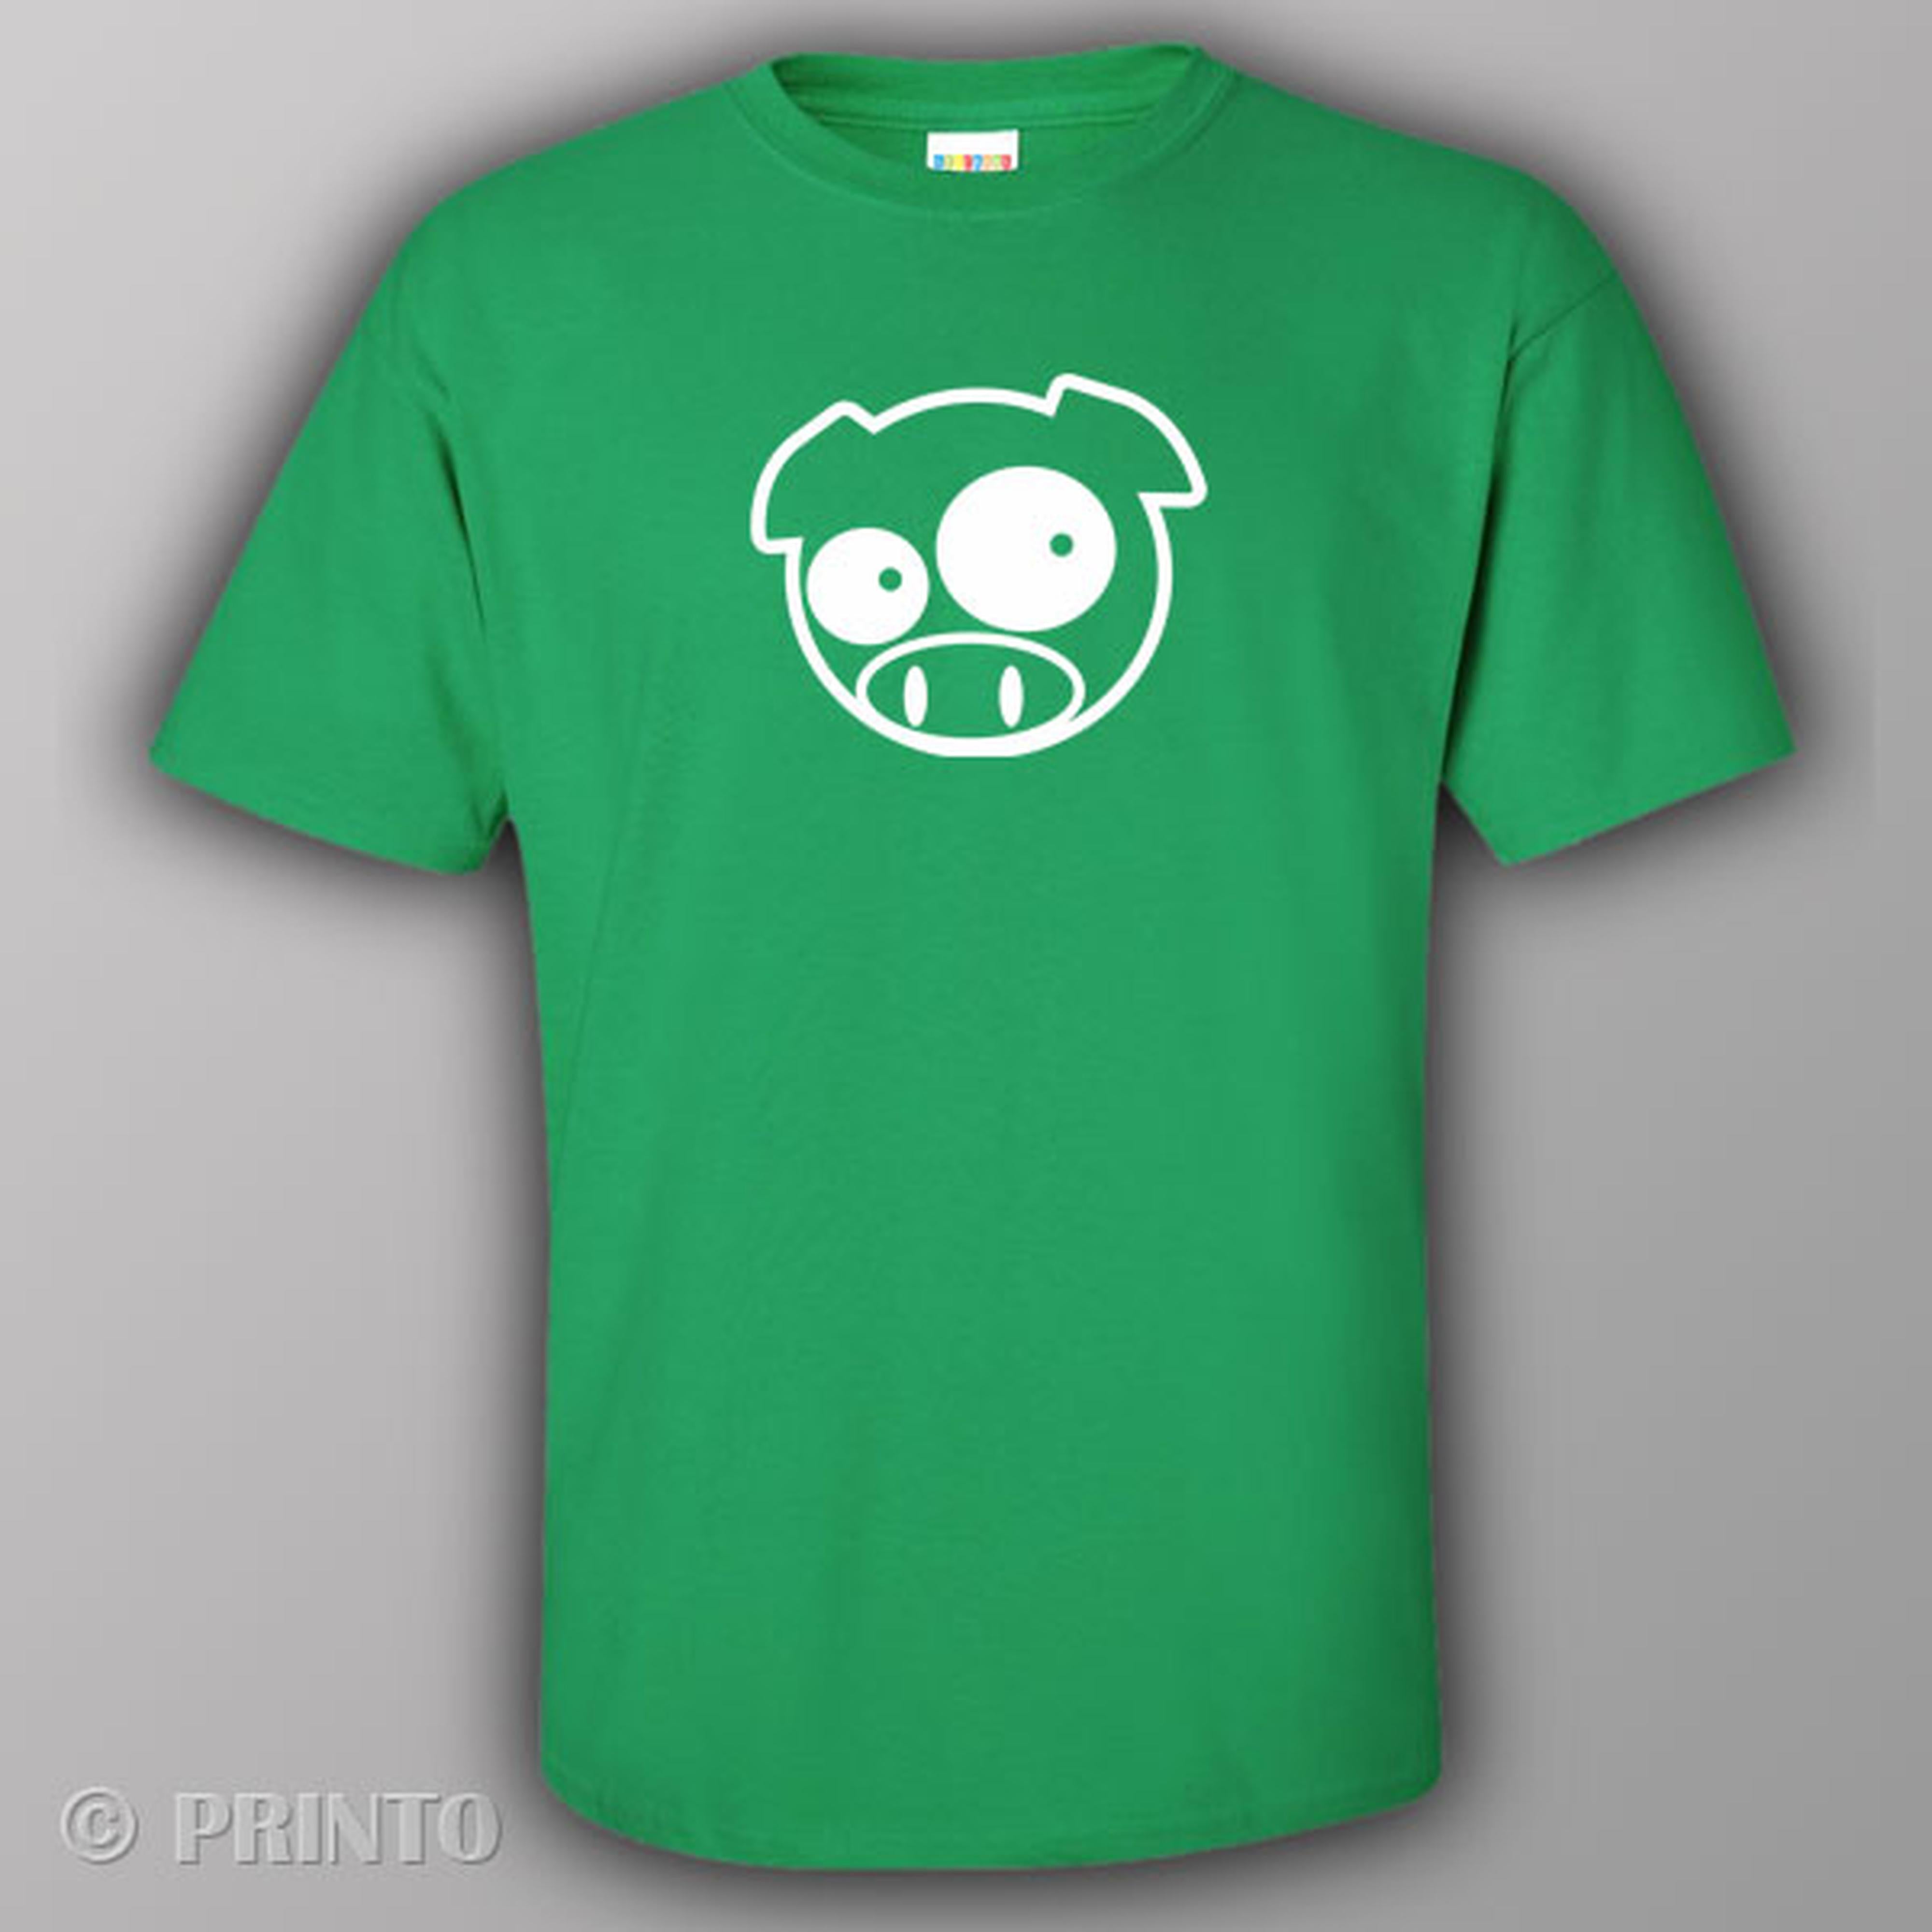 Jdm angry pig - T-shirt